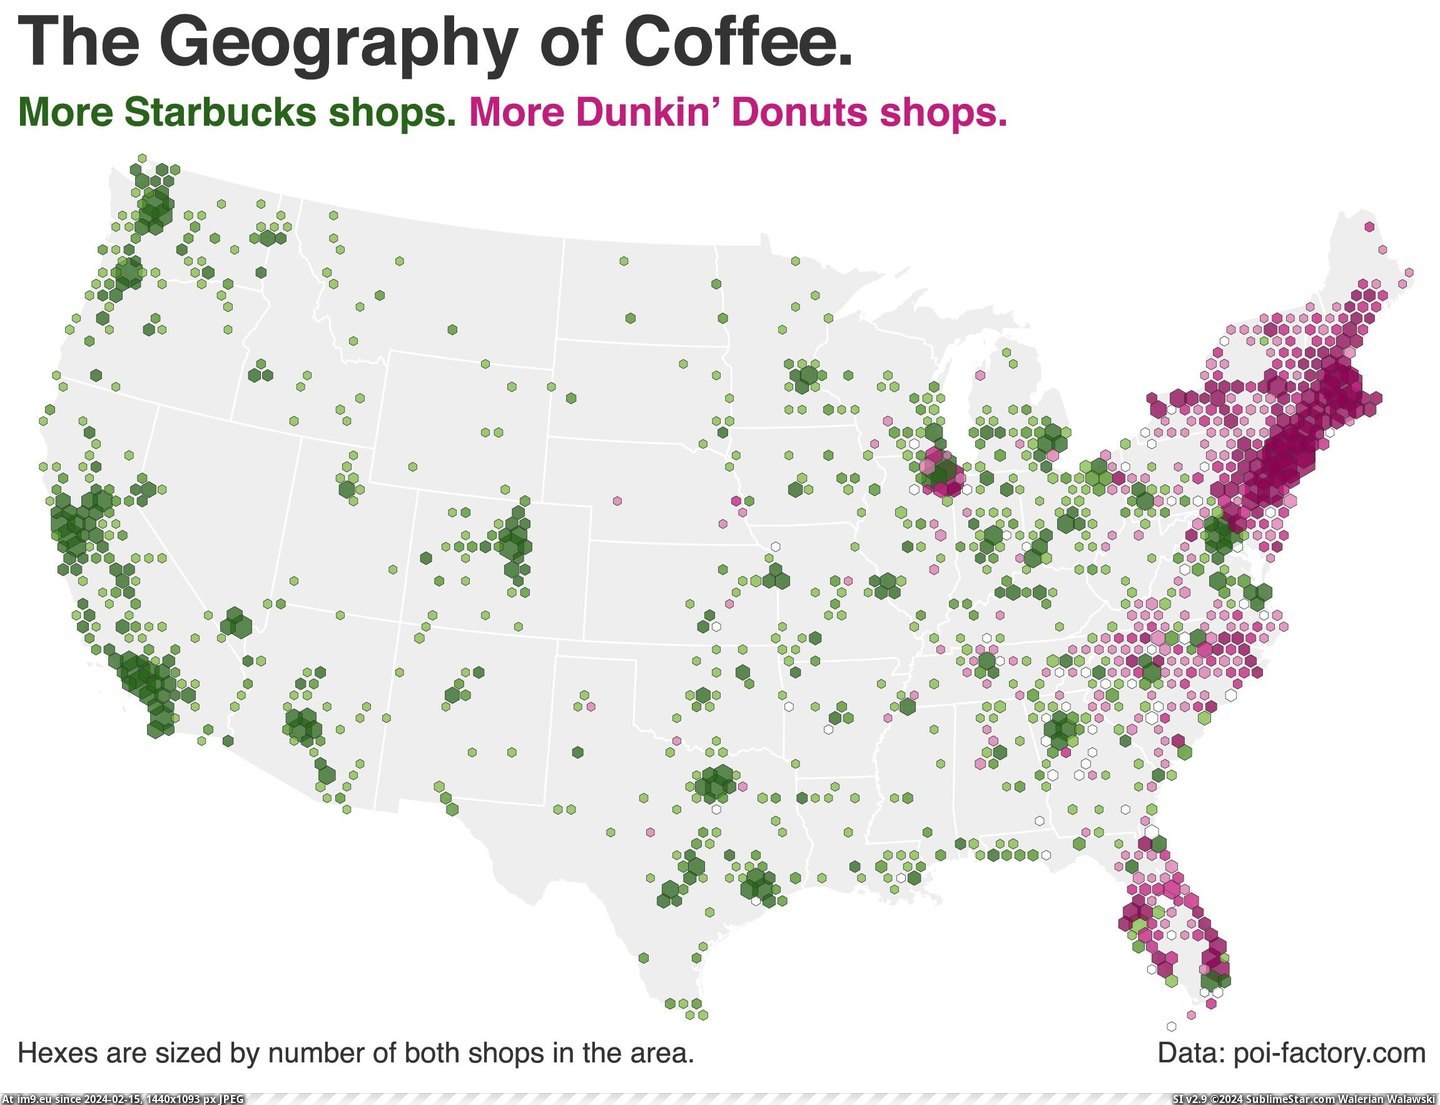 #Coffee #Shop #Geography #Dunkin #Donuts #Starbucks [Dataisbeautiful] Coffee shop geography: Starbucks vs. Dunkin' Donuts Pic. (Изображение из альбом My r/DATAISBEAUTIFUL favs))